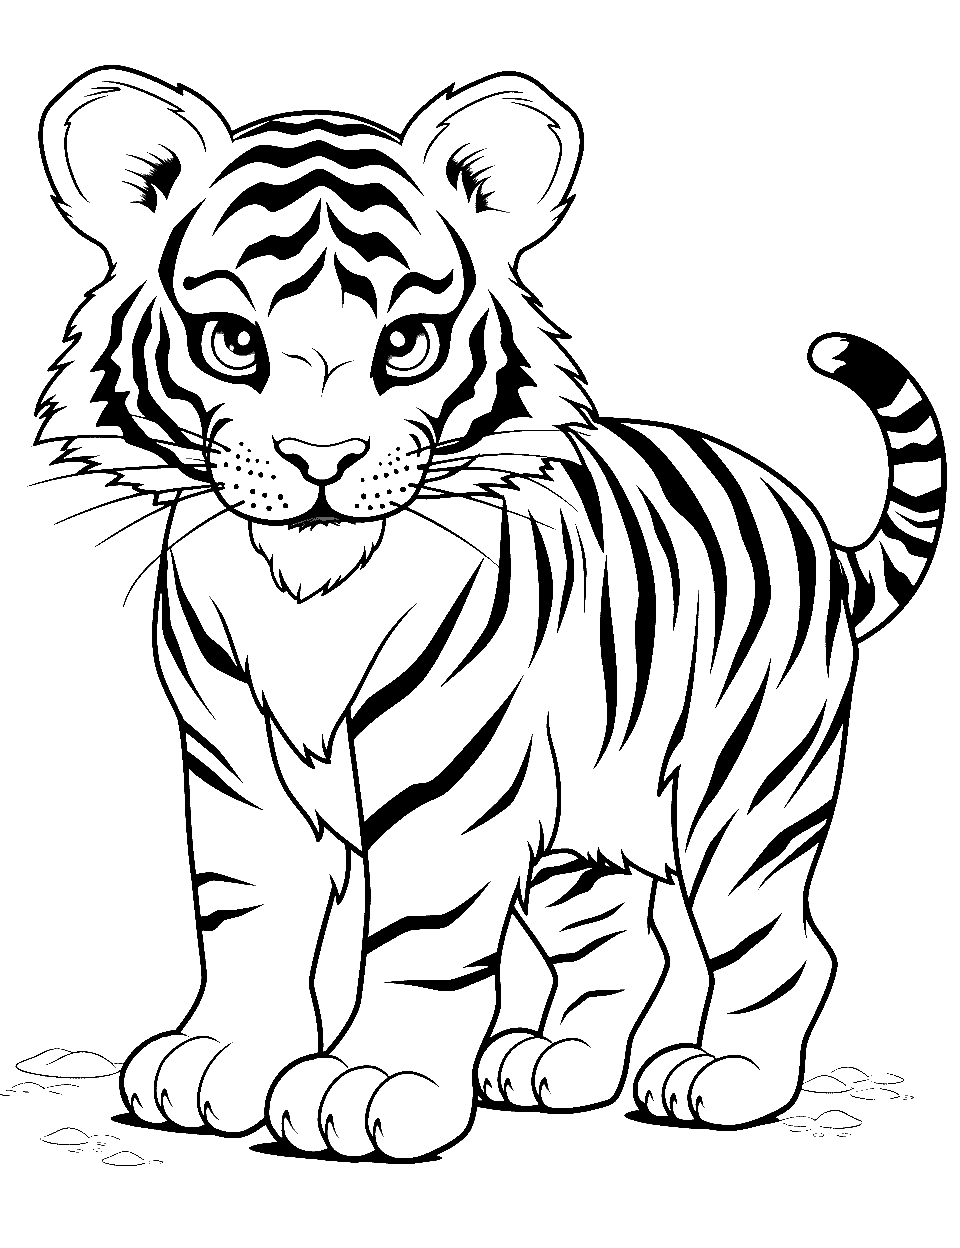 Kawaii Tiger Bliss Coloring Page - An adorable kawaii tiger with big sparkling eyes.